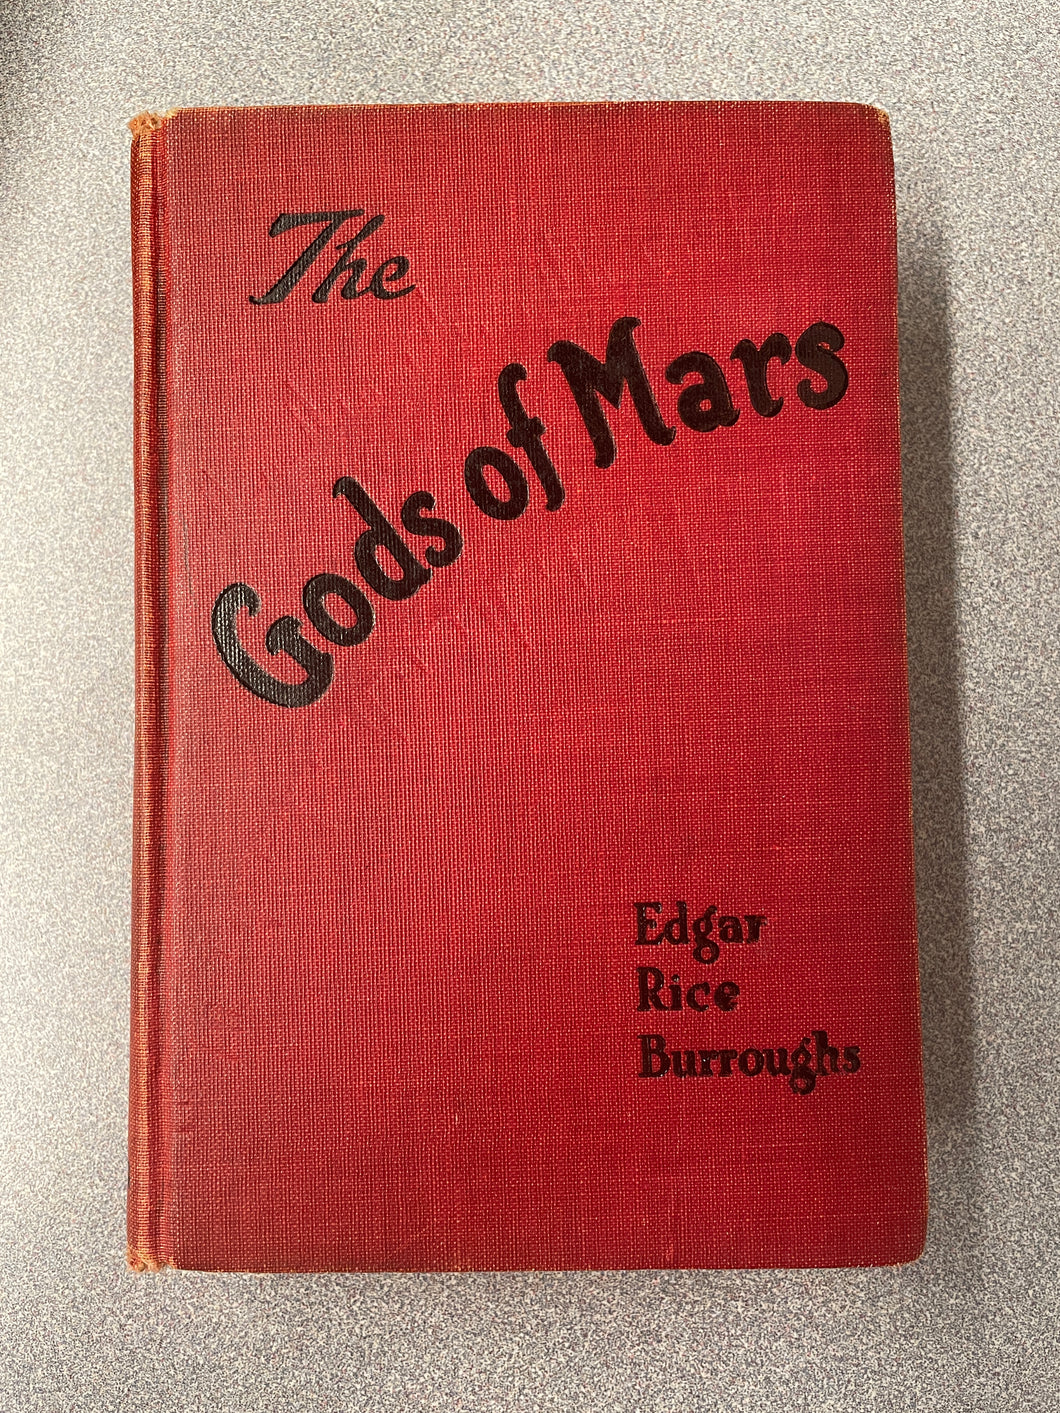 Burroughs, Edgar Rice, The Gods of Mars [1918] CC 4/23